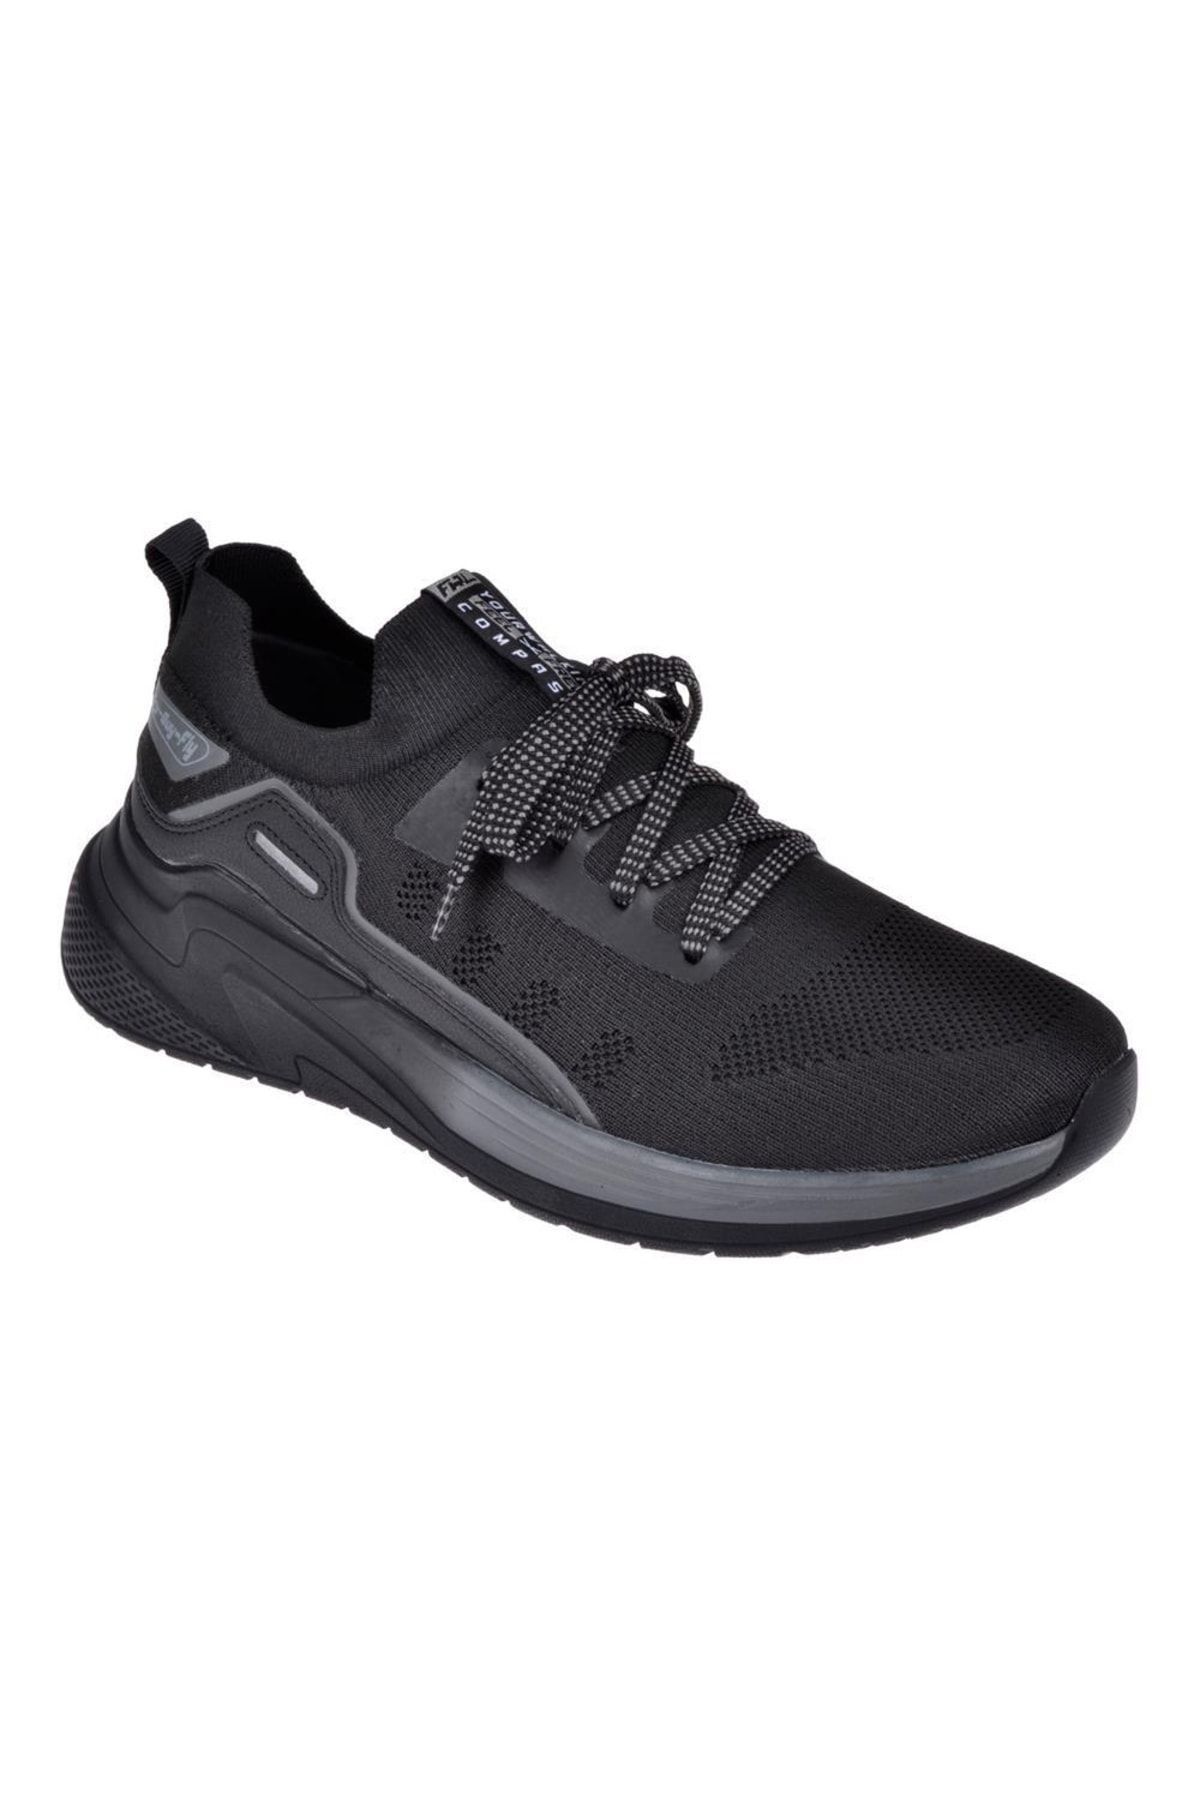 Forelli Comfort Triko Erkek Spor Ayakkabı Sneaker For-guti Siyah